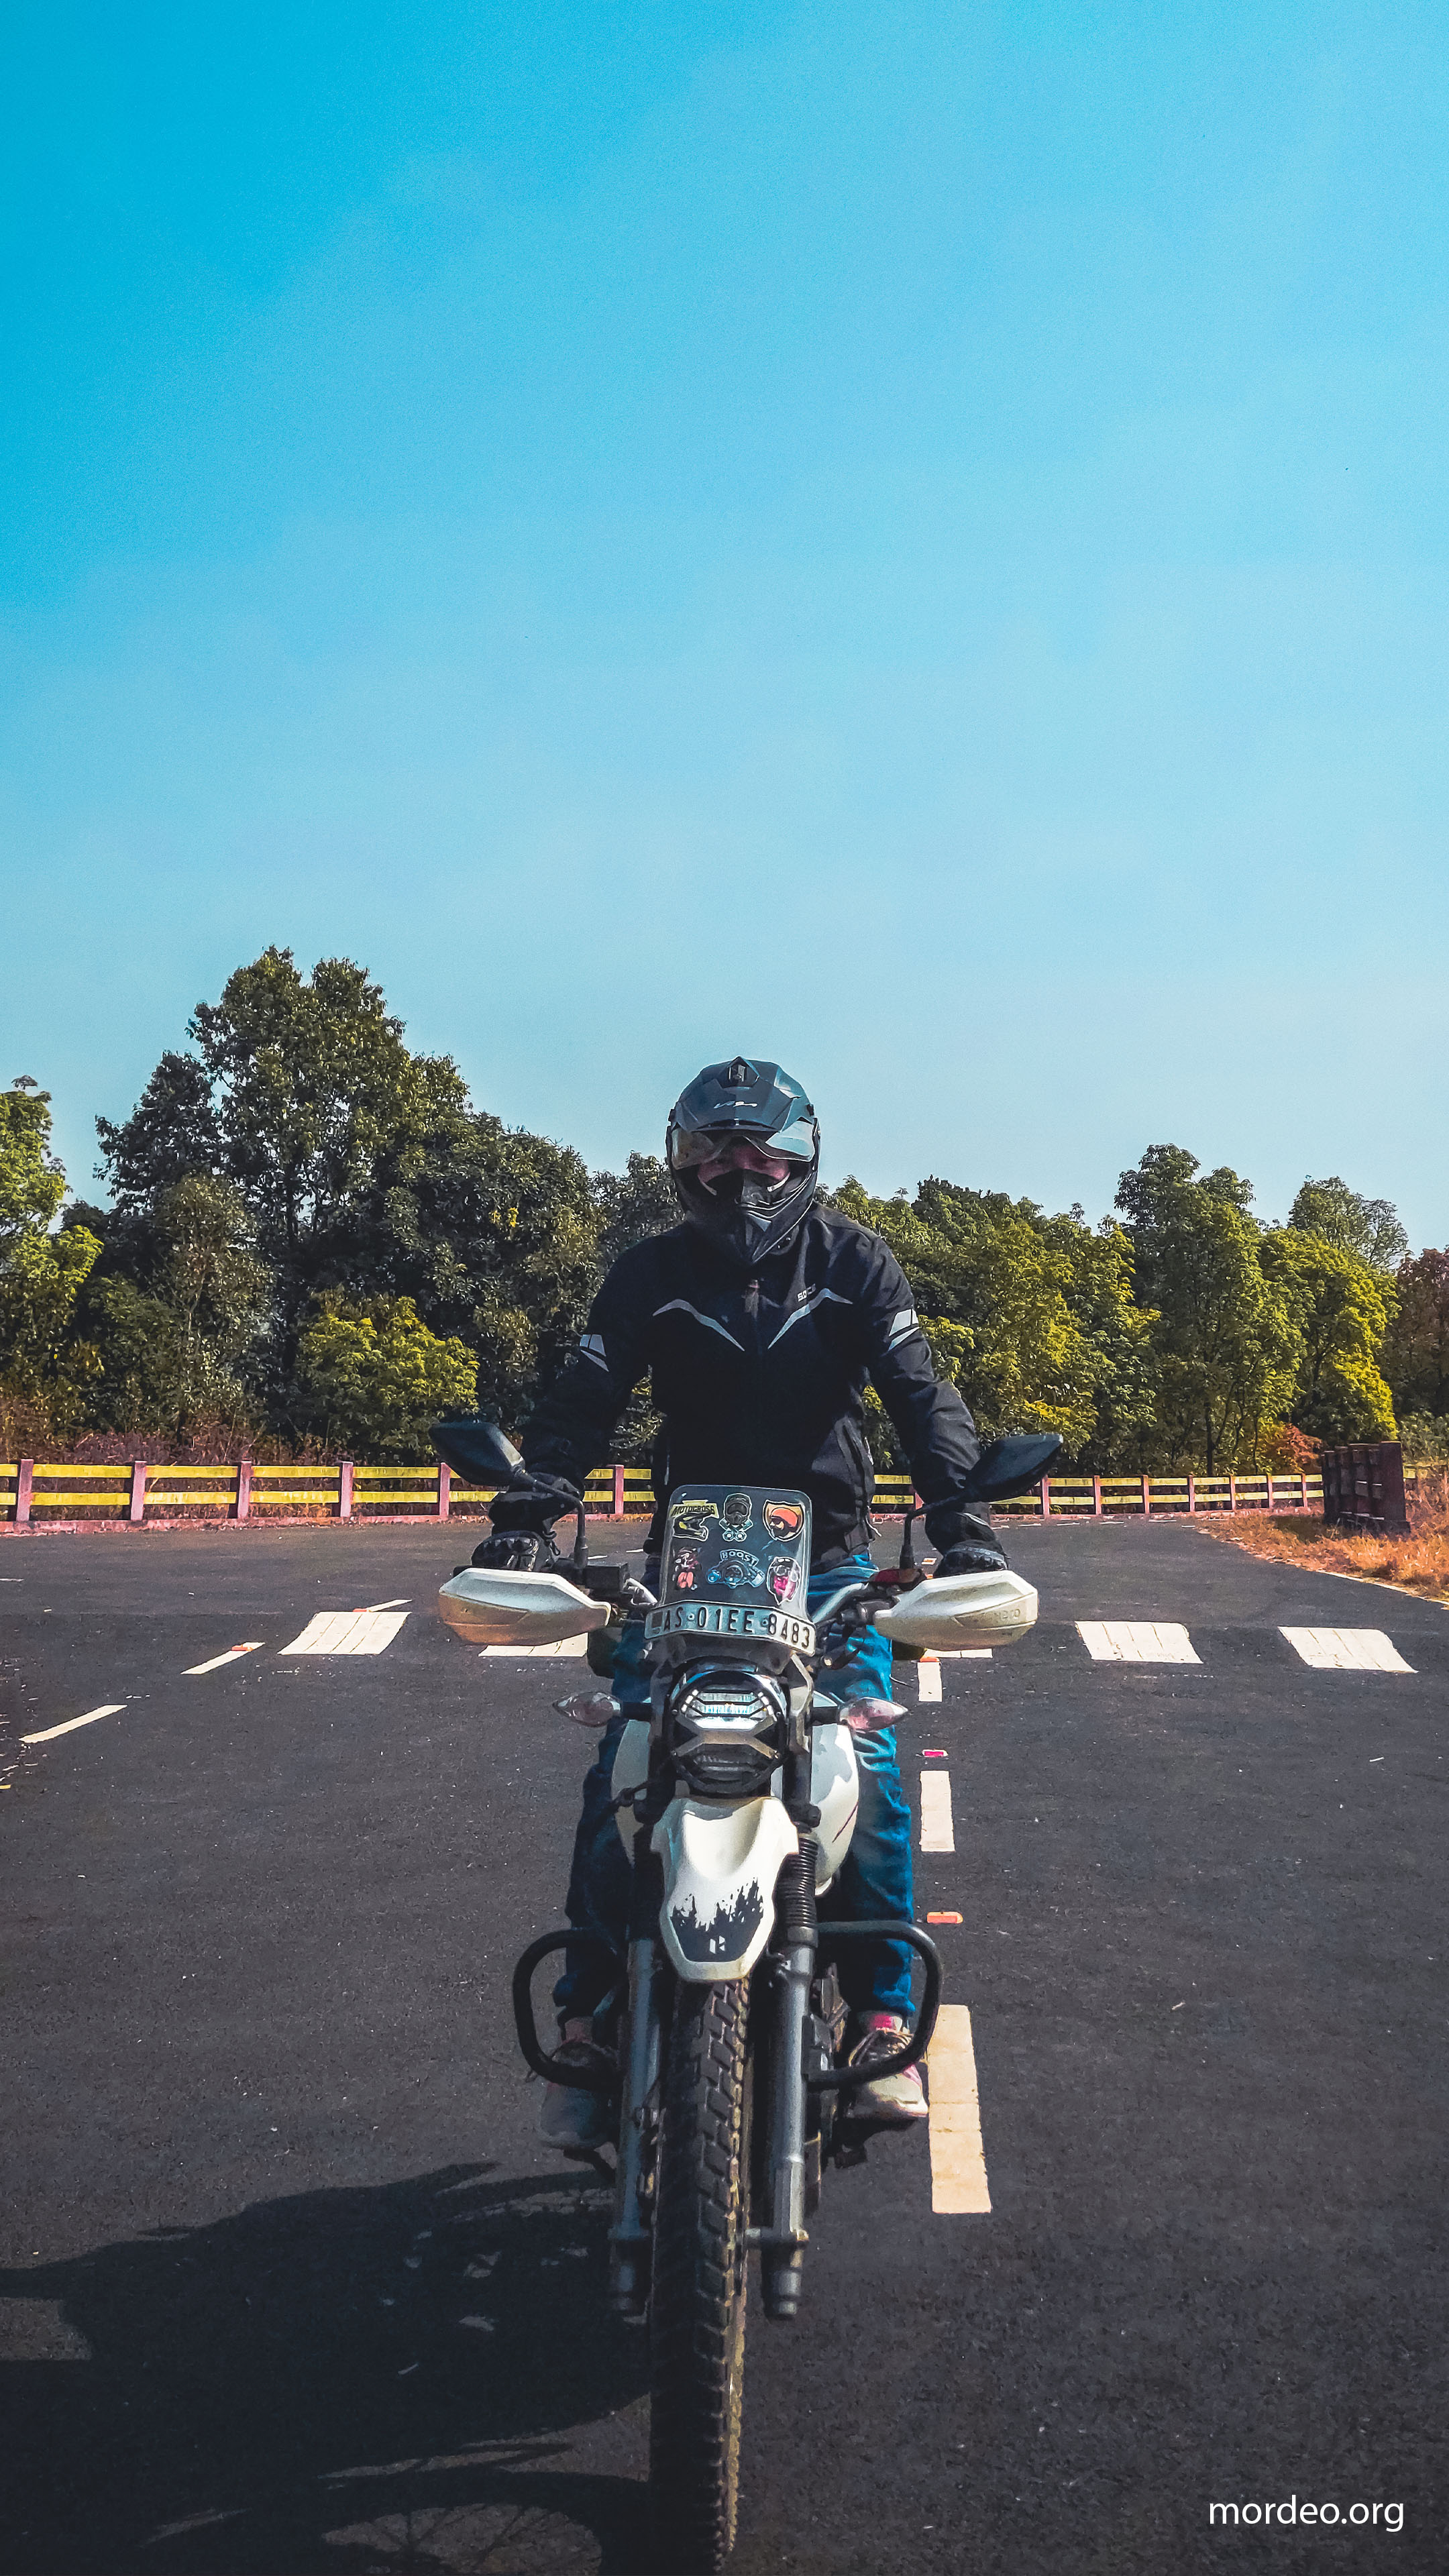 Hero Xpulse Rider Traveler 4K Ultra HD Mobile Wallpaper